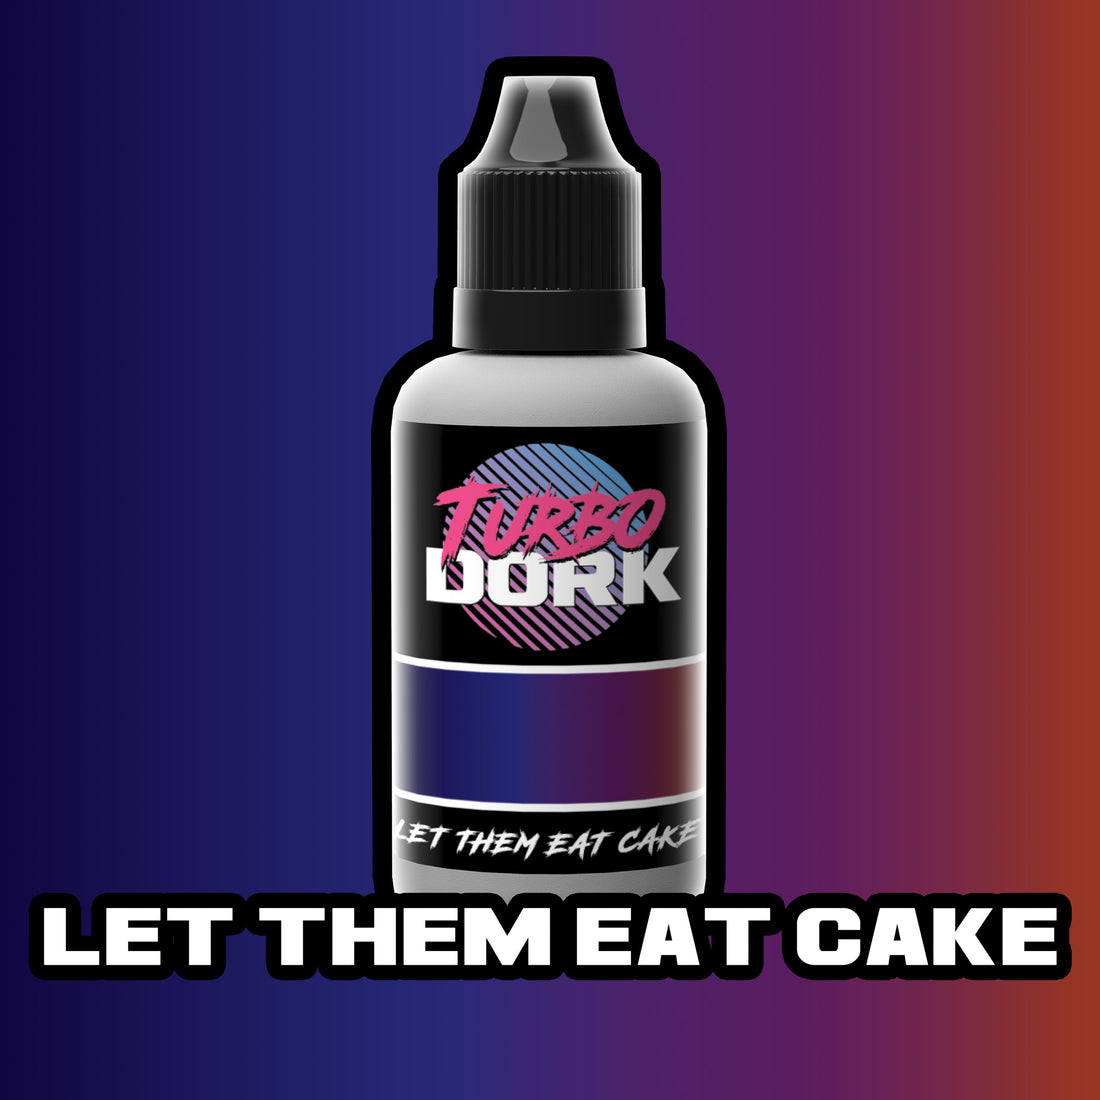 Turbodork Paint: Let Them Eat Cake Turboshift